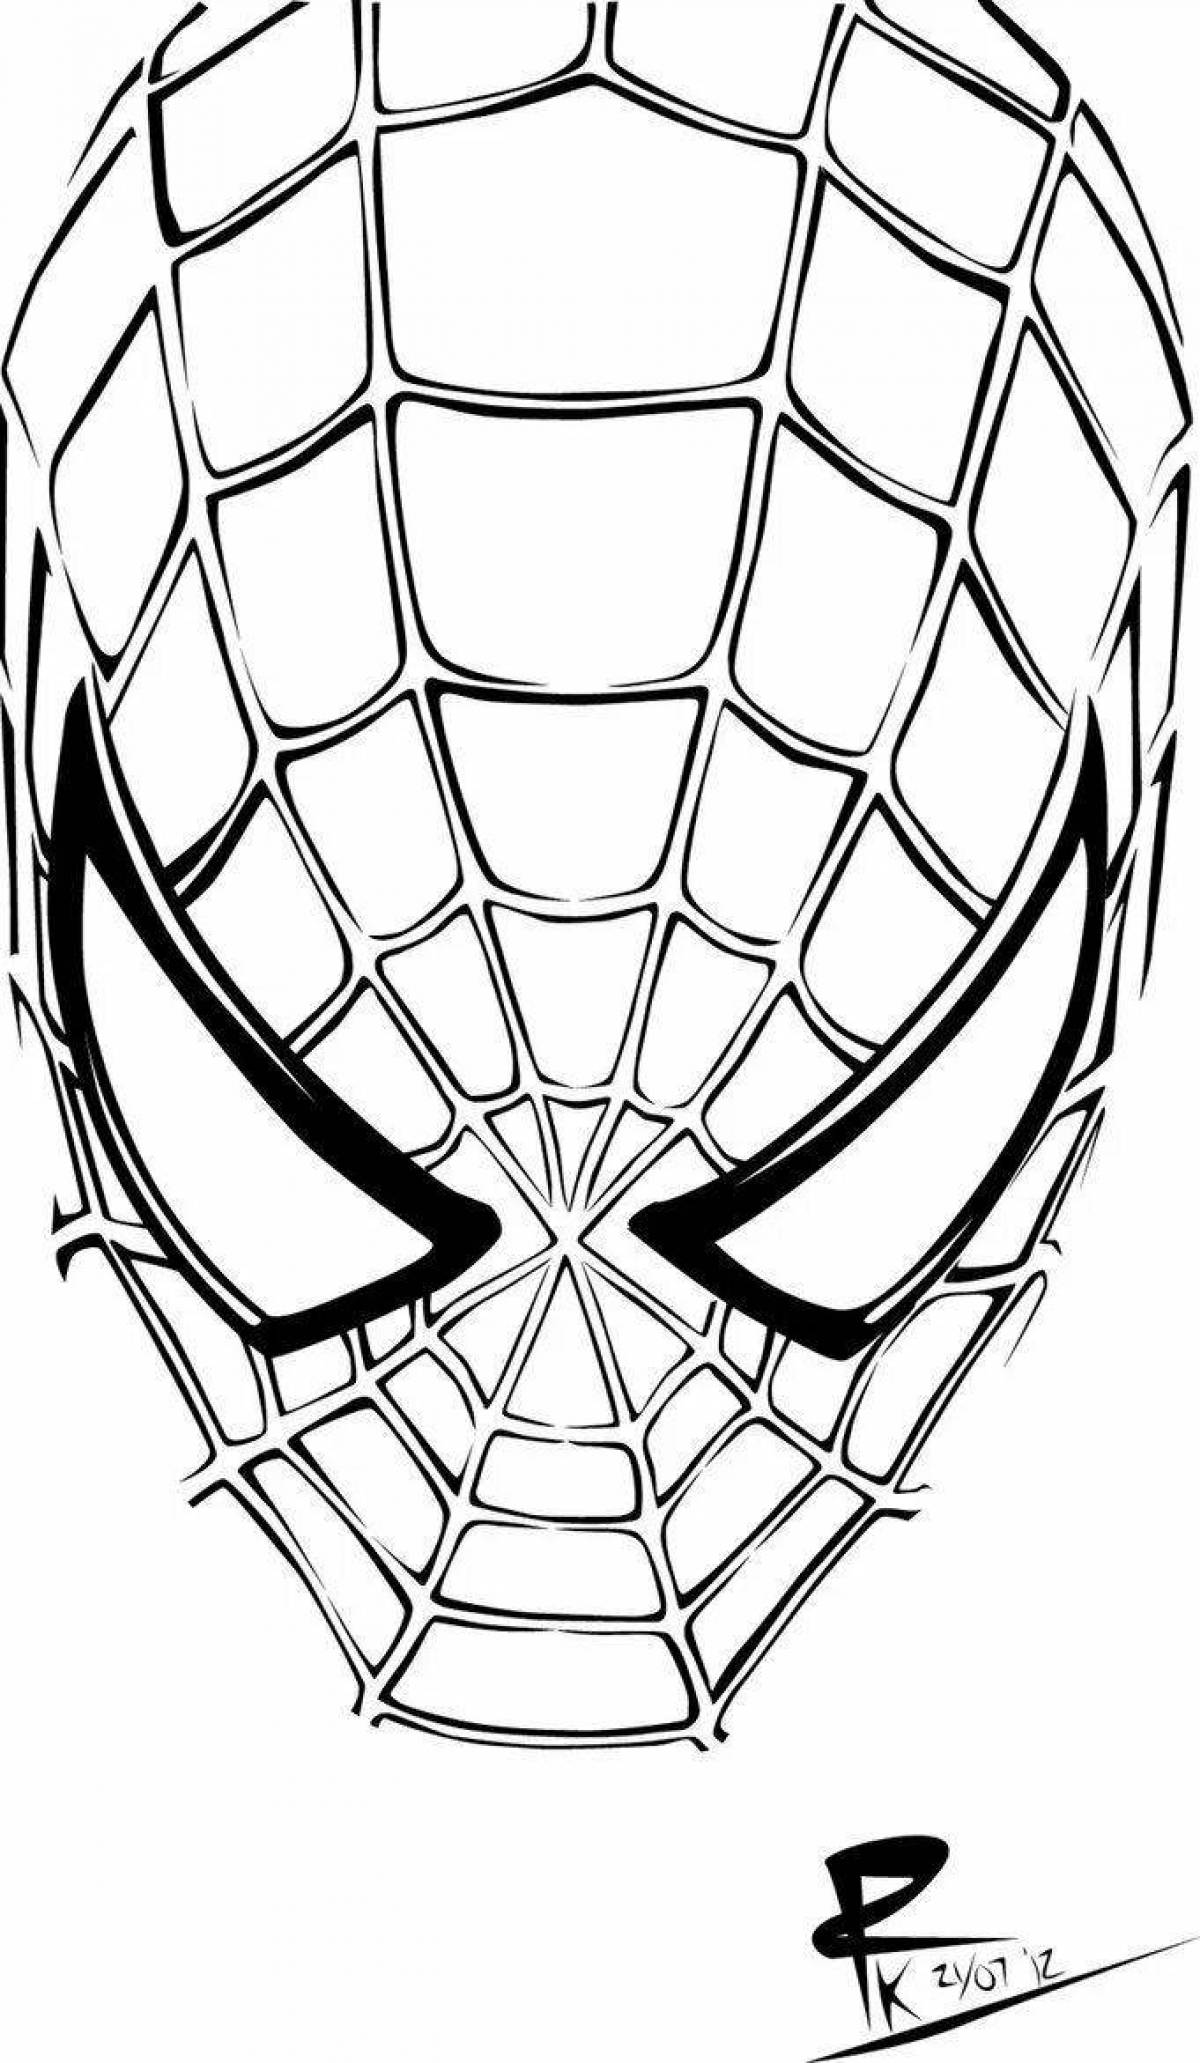 Spiderman mask #6